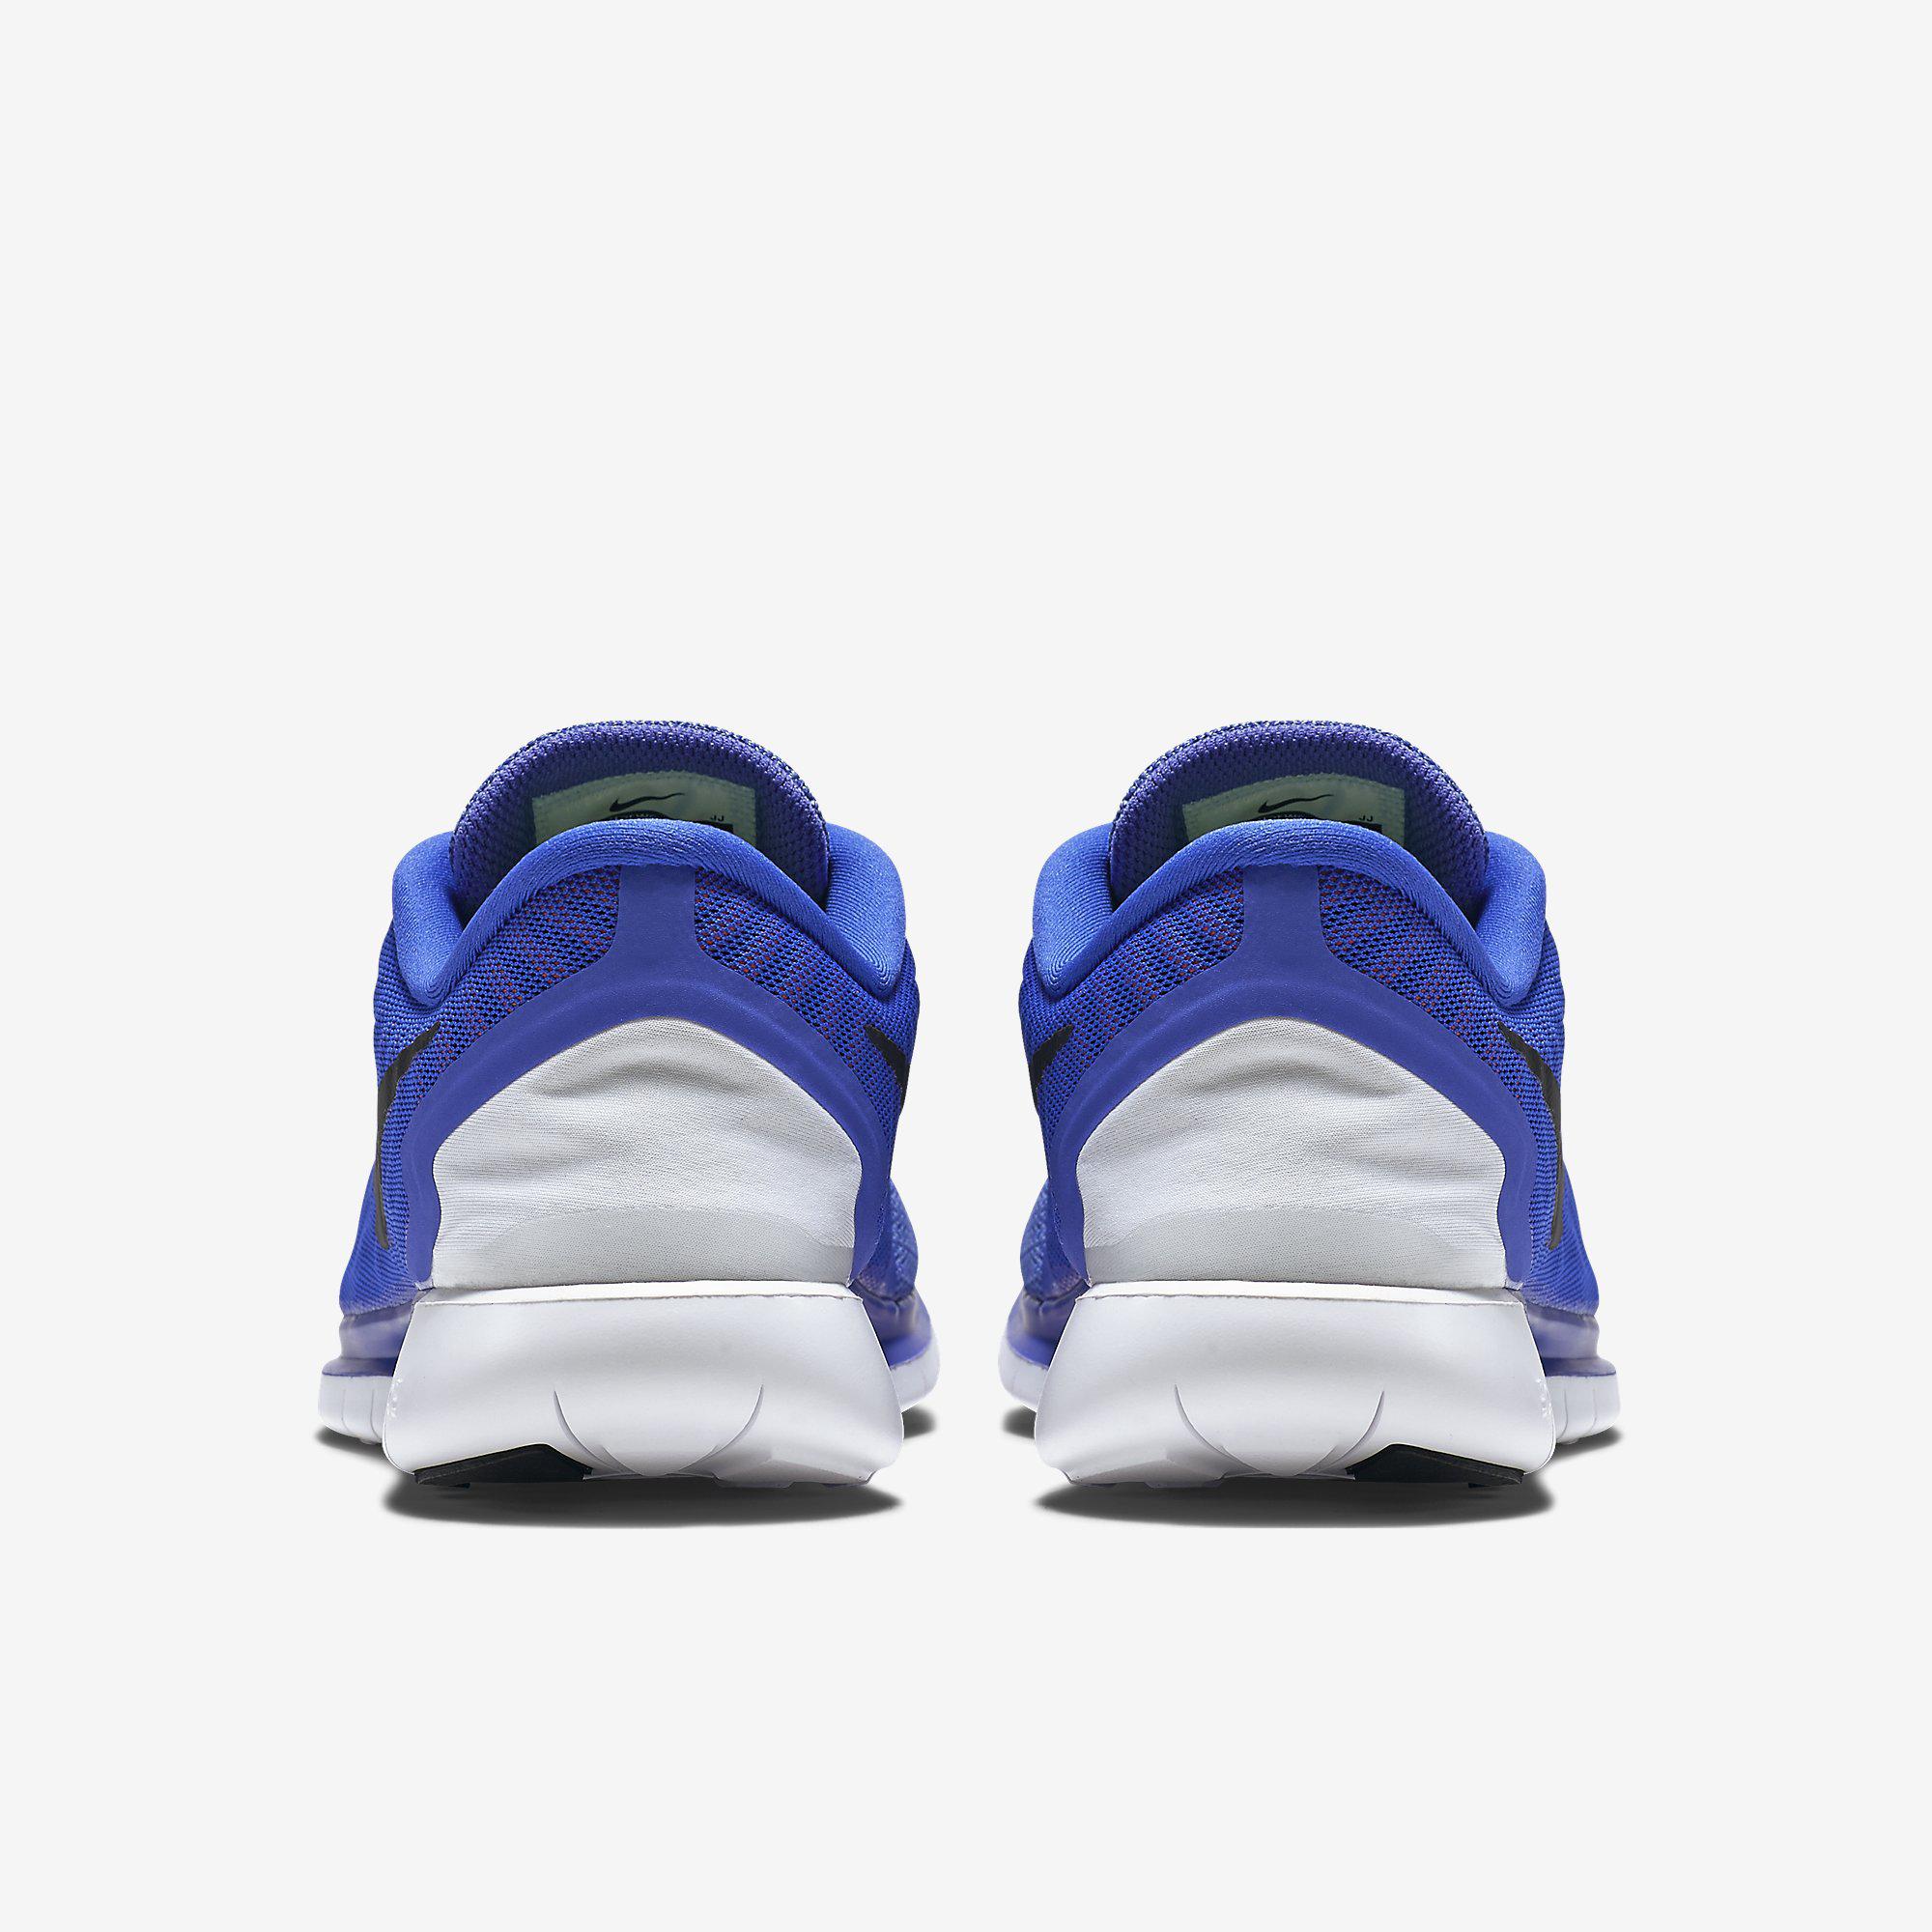 Nike Womens Free 5.0+ Running Shoes - Persian Violet - Tennisnuts.com